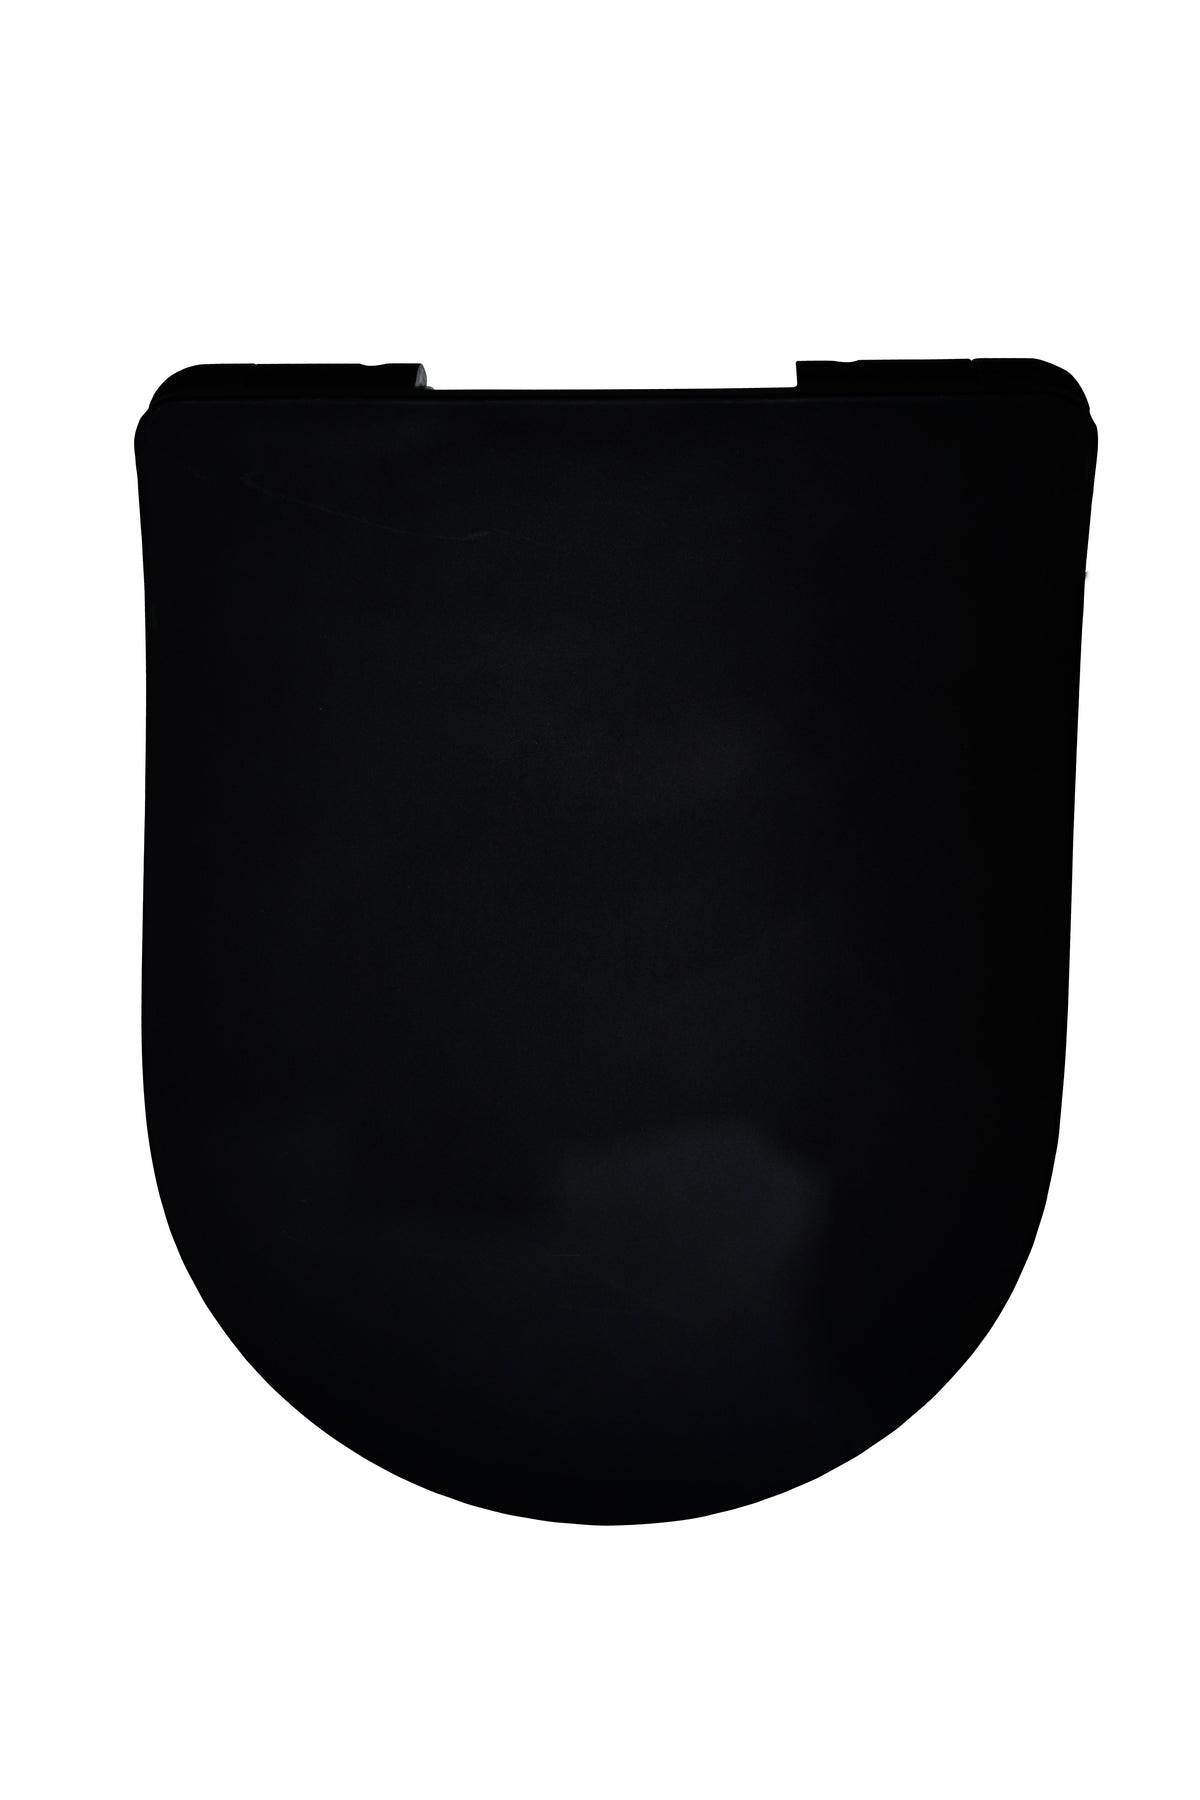 Aquazuro toiletzitting D-vorm duroplast zwart mat